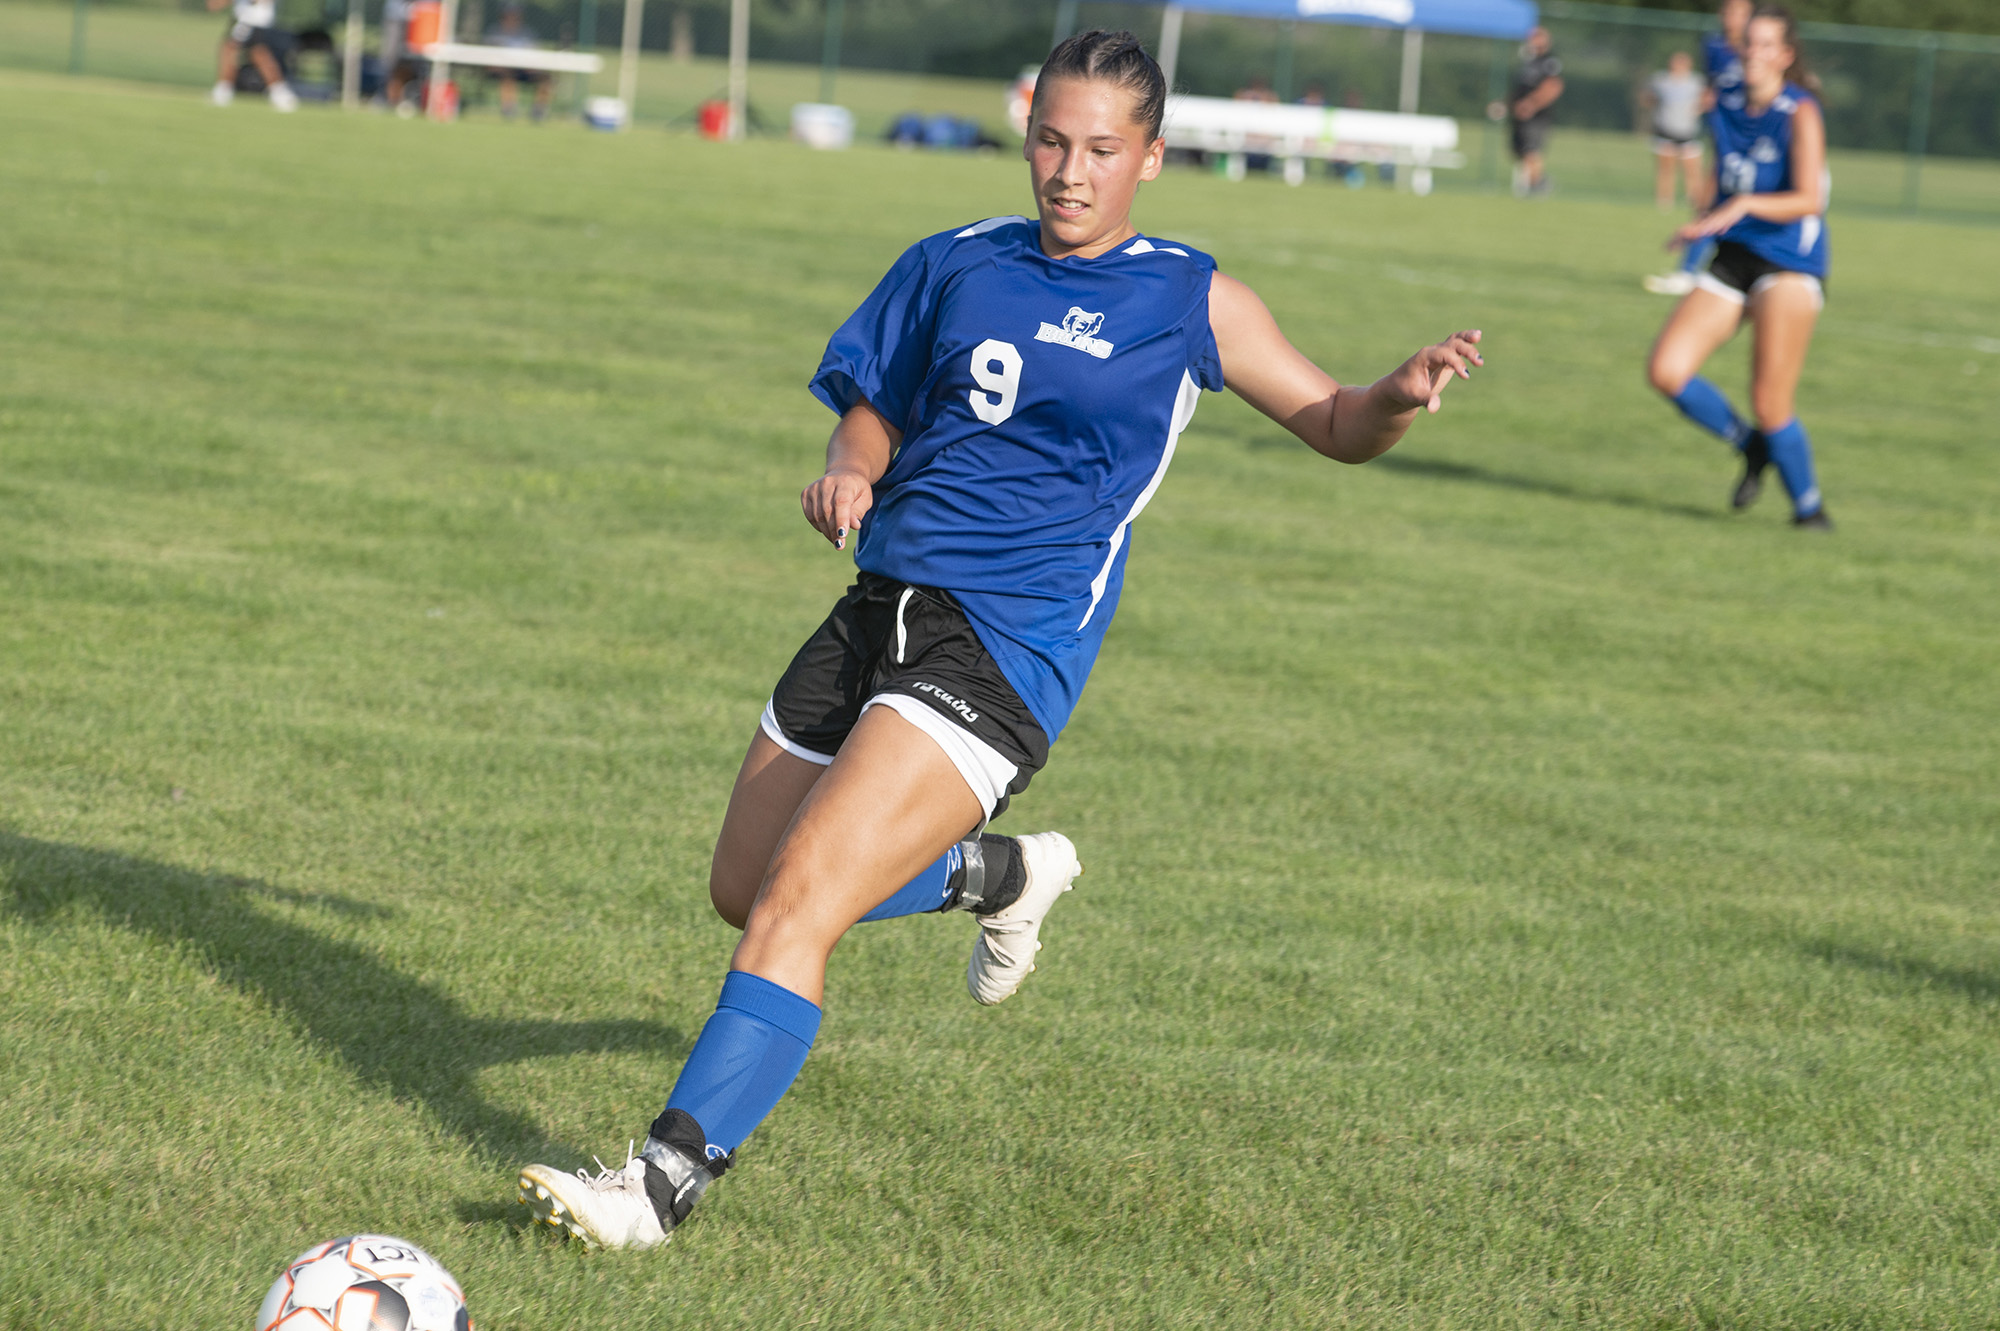 KCC soccer player Allison Biergeder competes during a game.